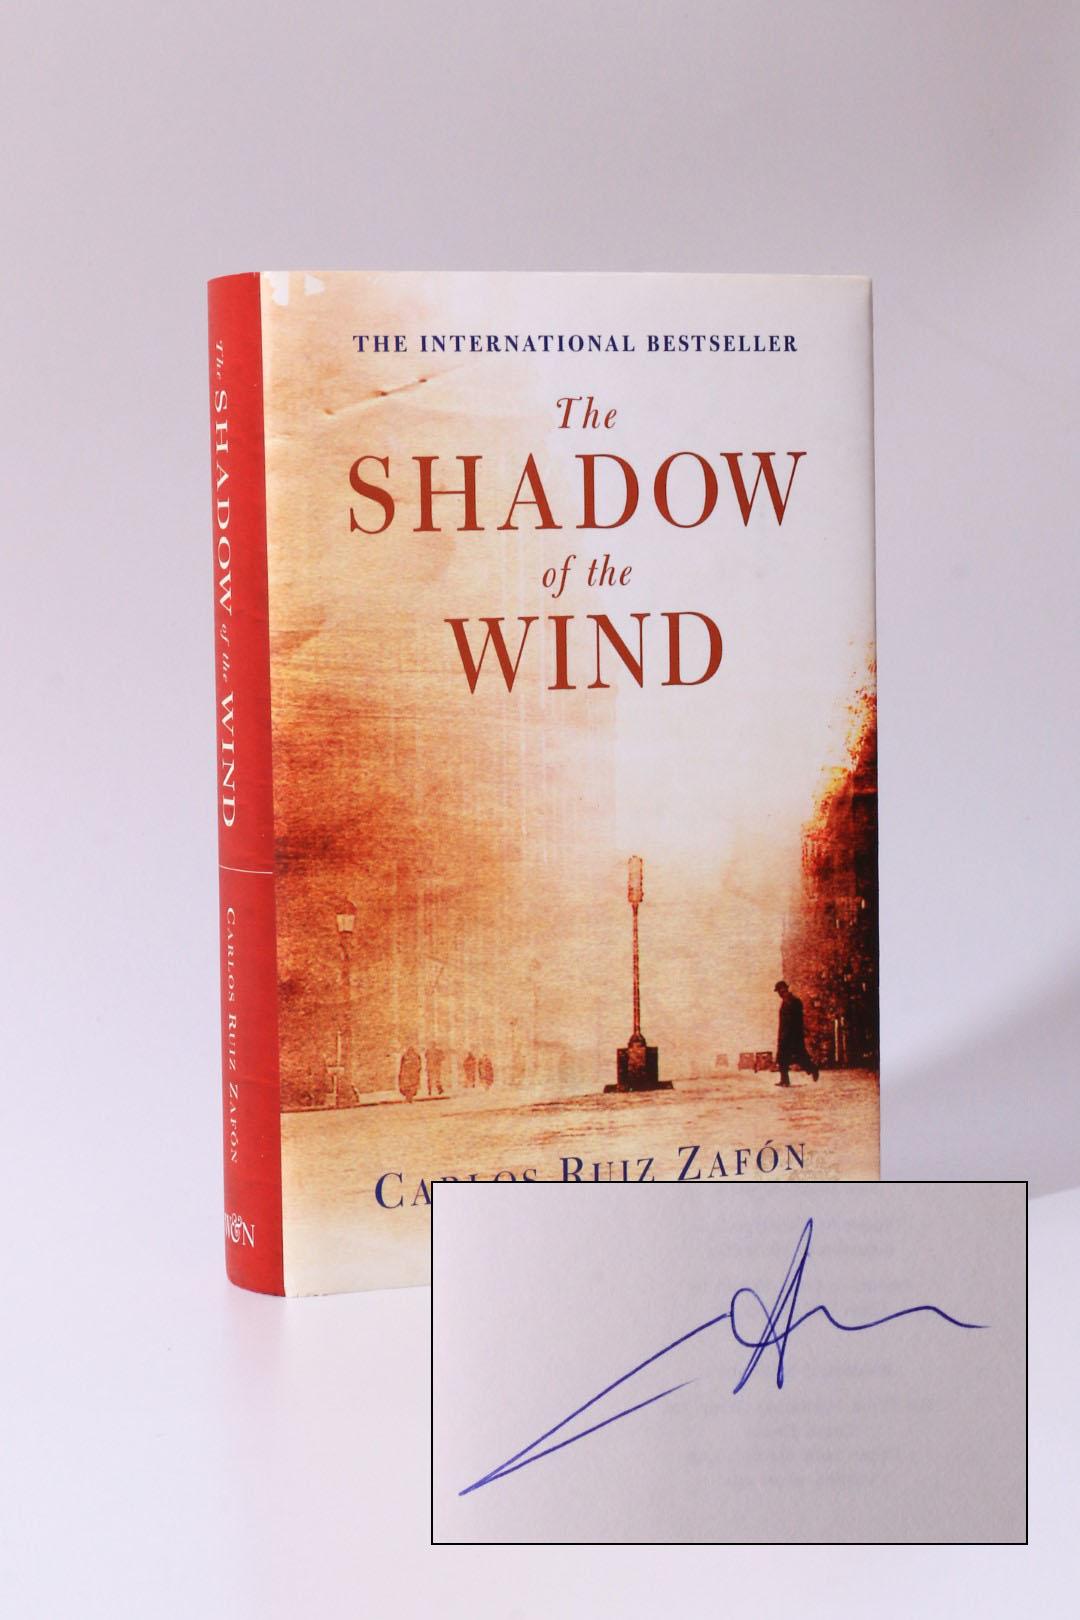 Carlos Ruiz Zafon - The Shadow of the Wind - Weidenfeld & Nicolson, 2004, Signed First Edition.